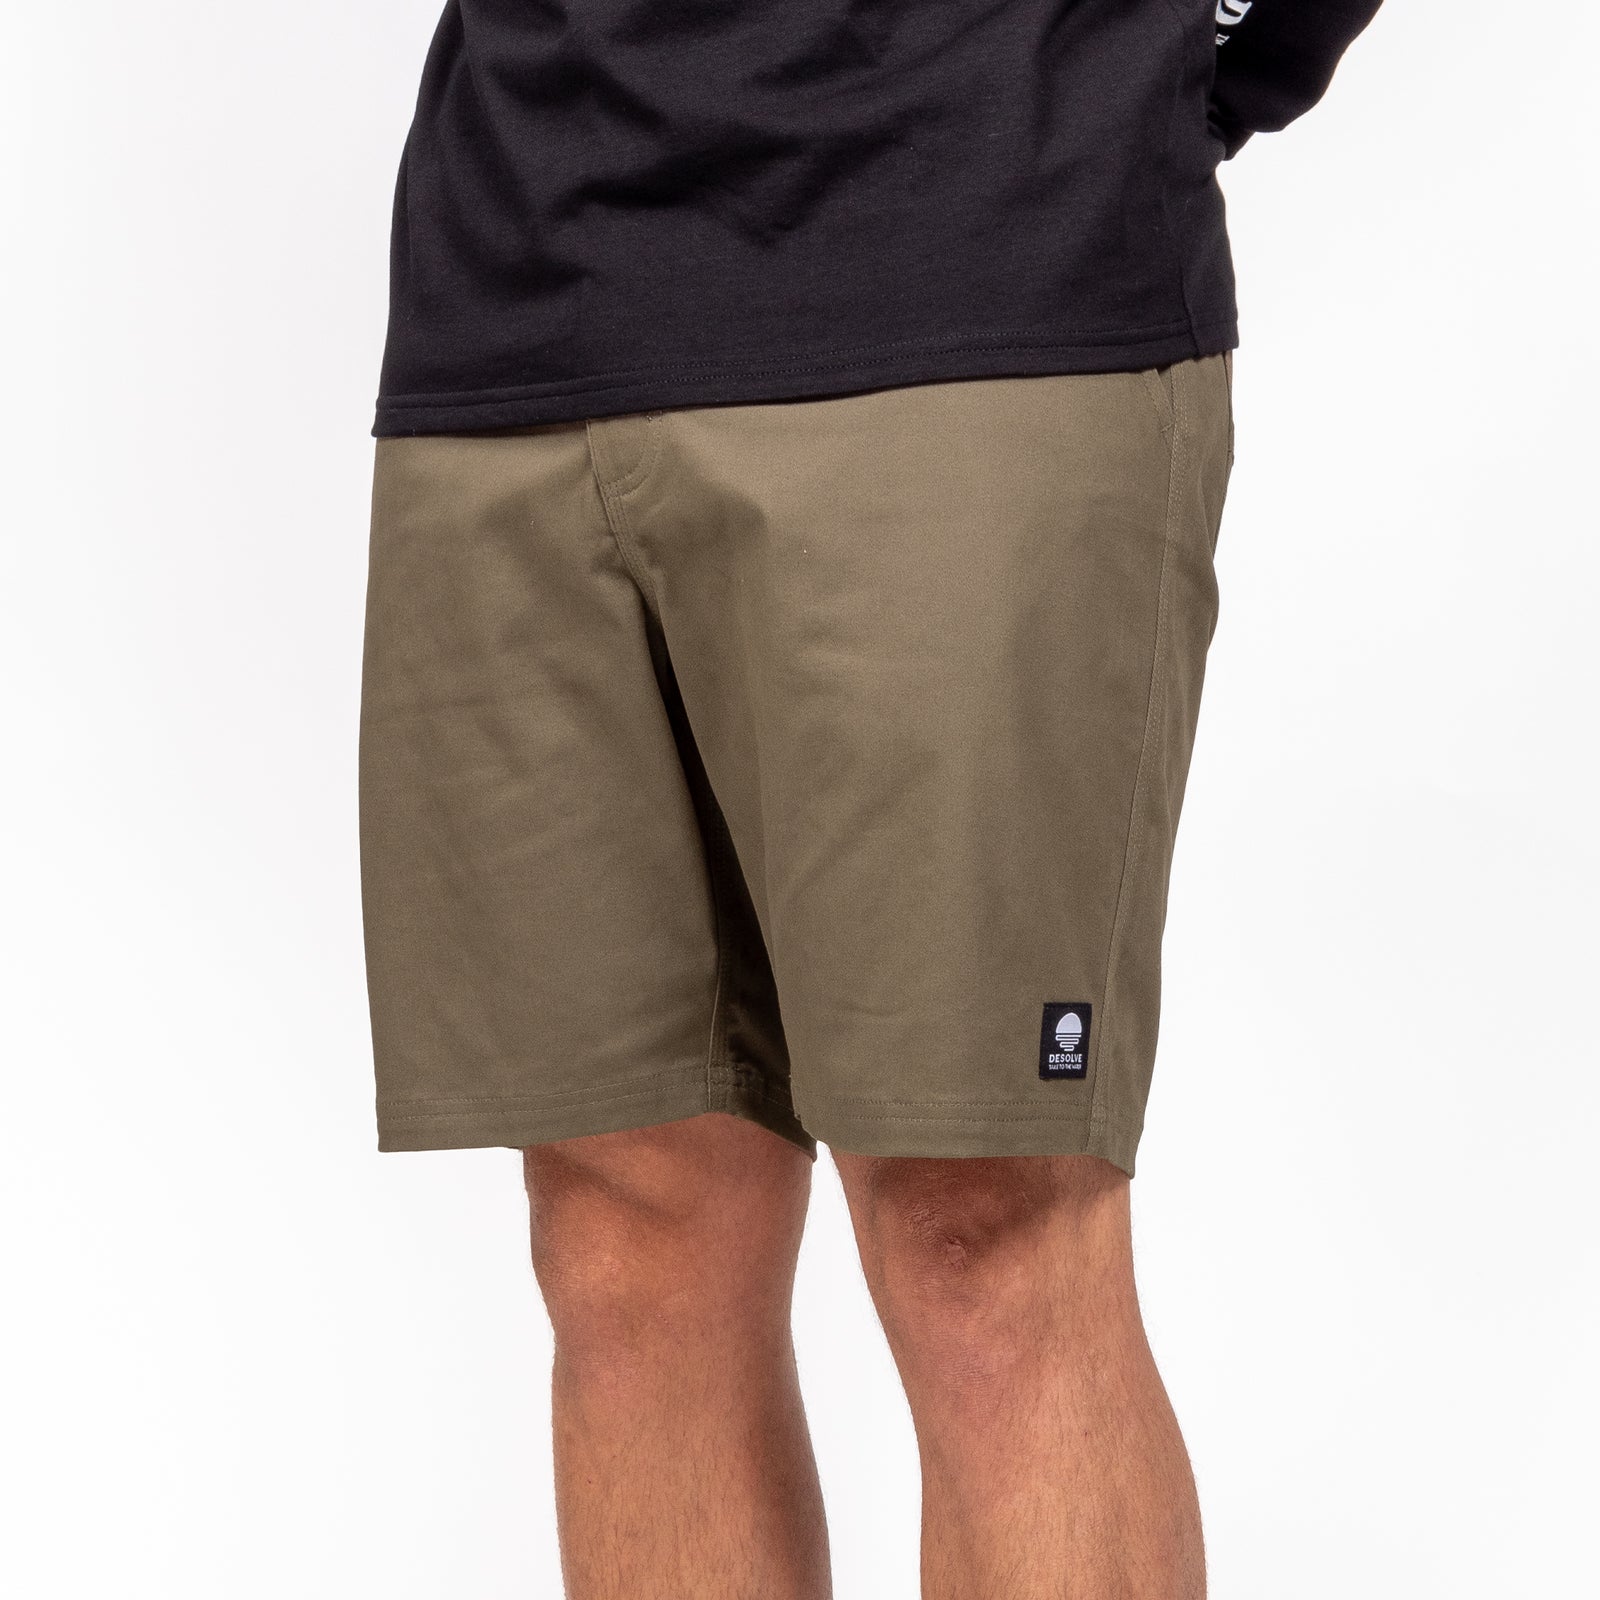 UV Rapid-Dry Shorts & Leggings, Desolve, Women's Fishing Clothing NZ -  Desolve Supply Co.